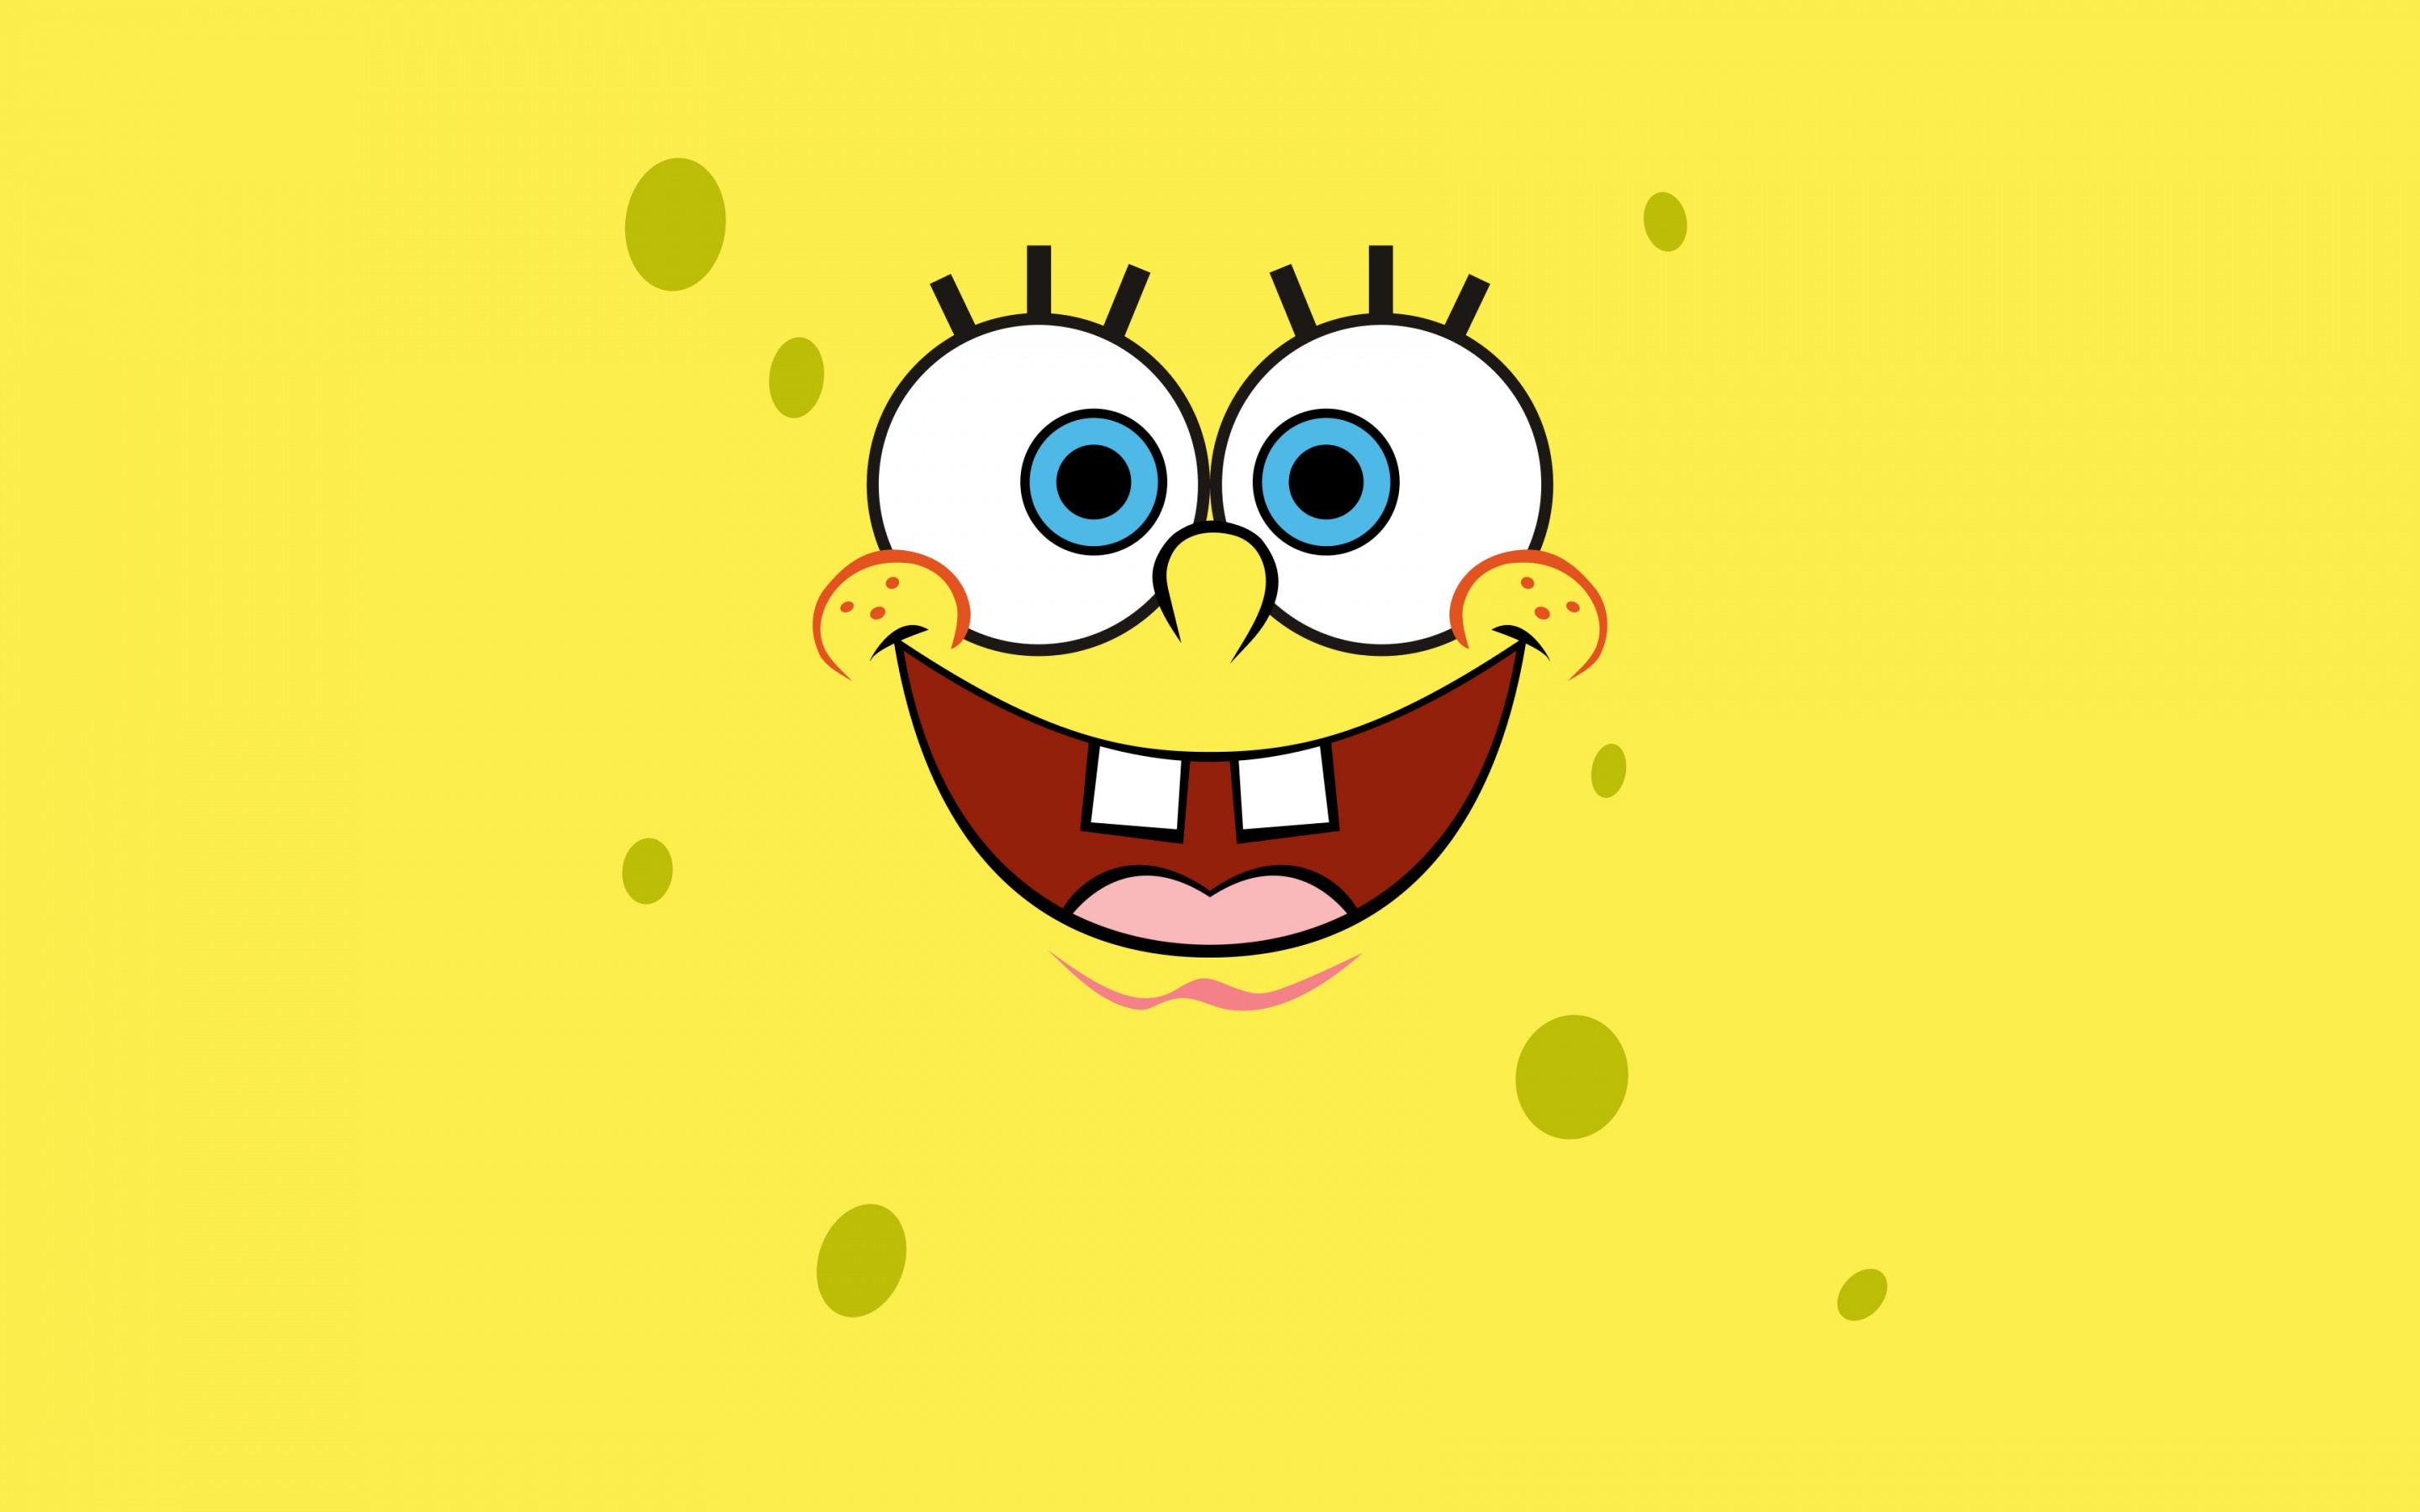 Wallpaper ID 355470  TV Show Spongebob Squarepants Phone Wallpaper   1080x2400 free download